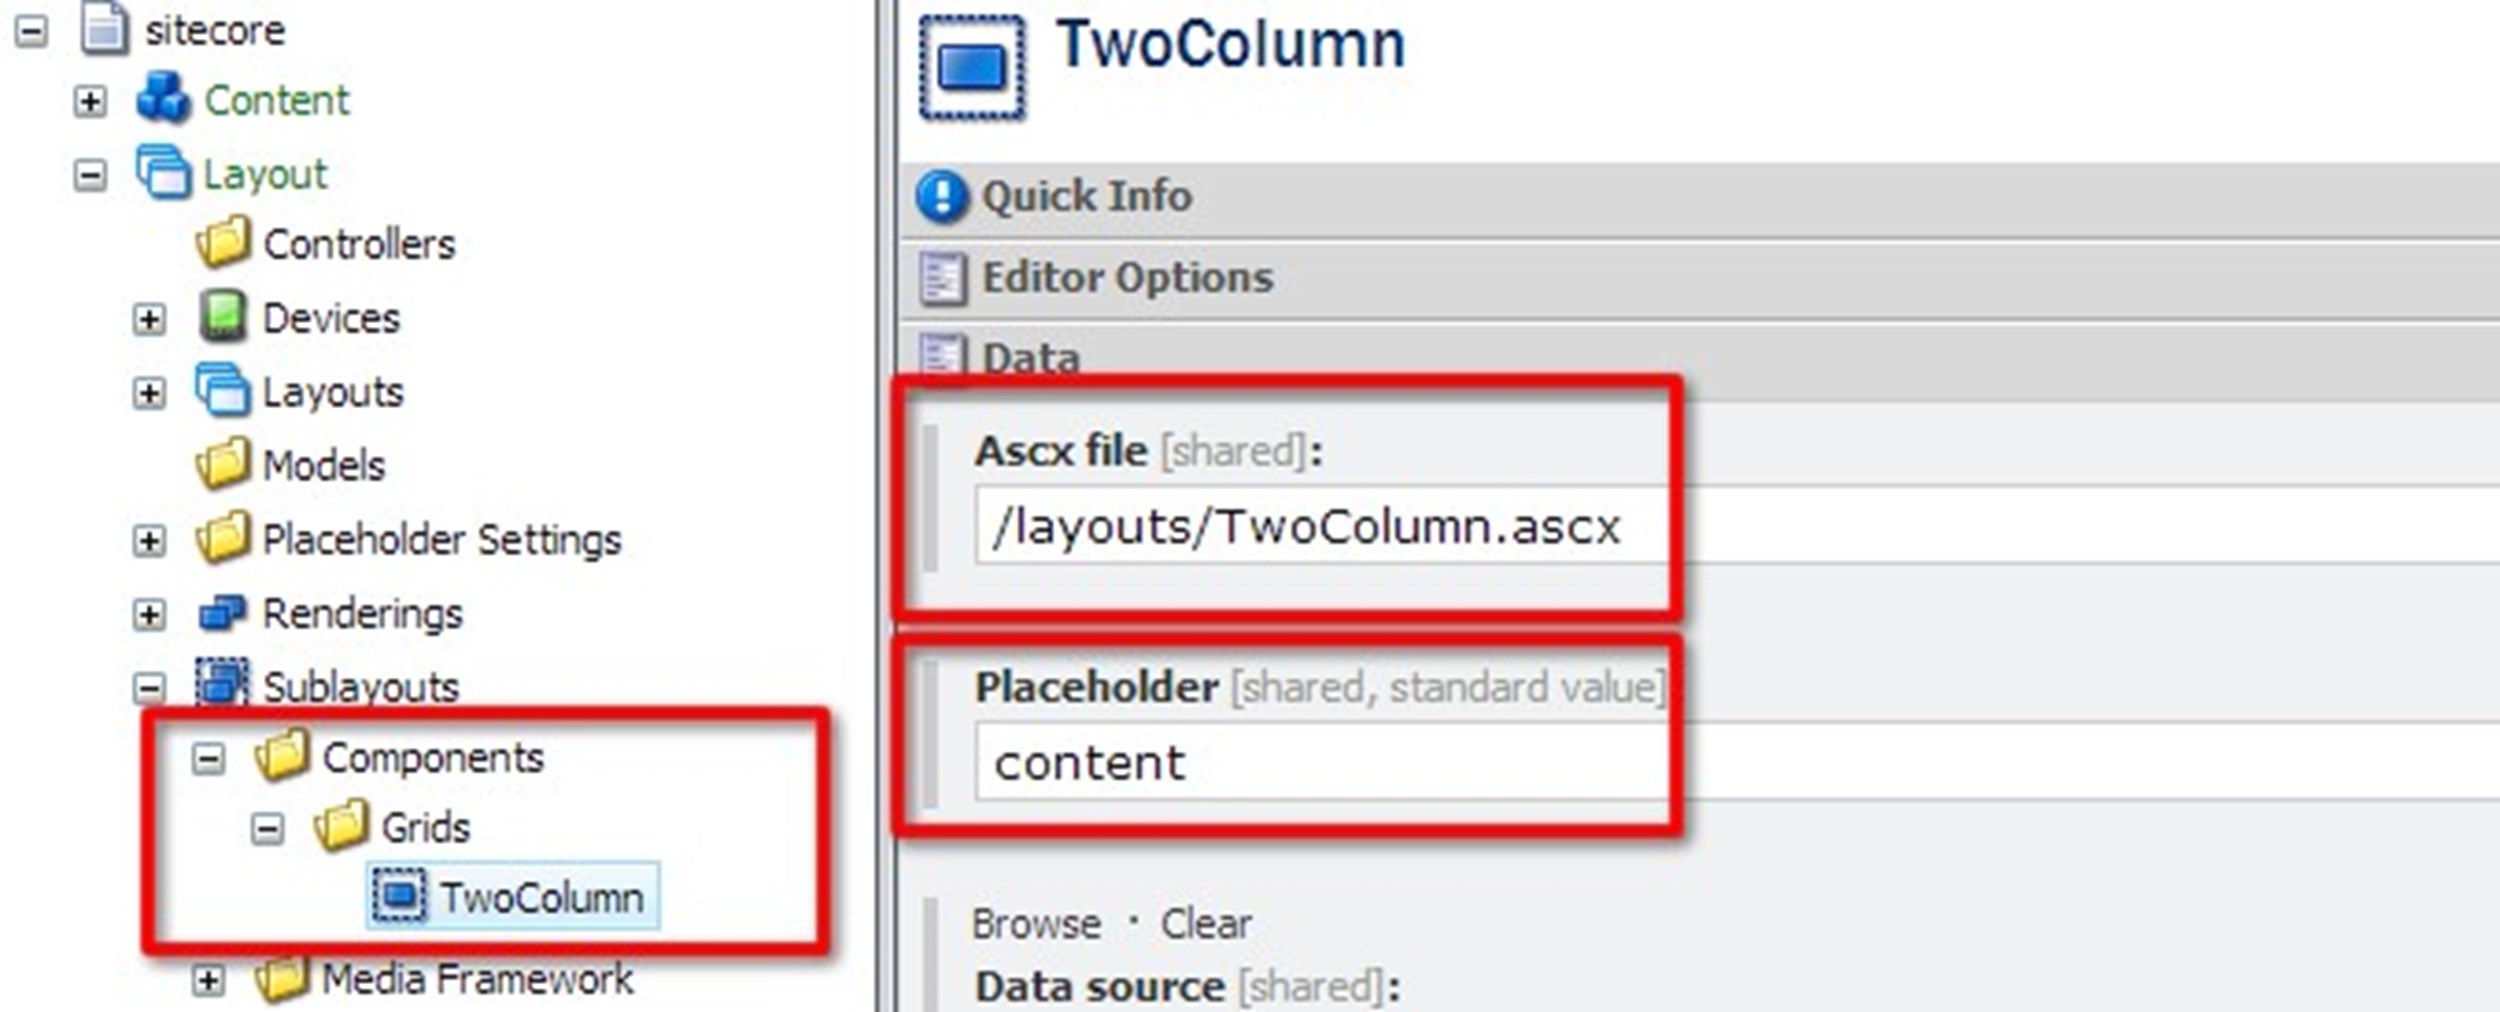 1Sitecore components- two column.jpg